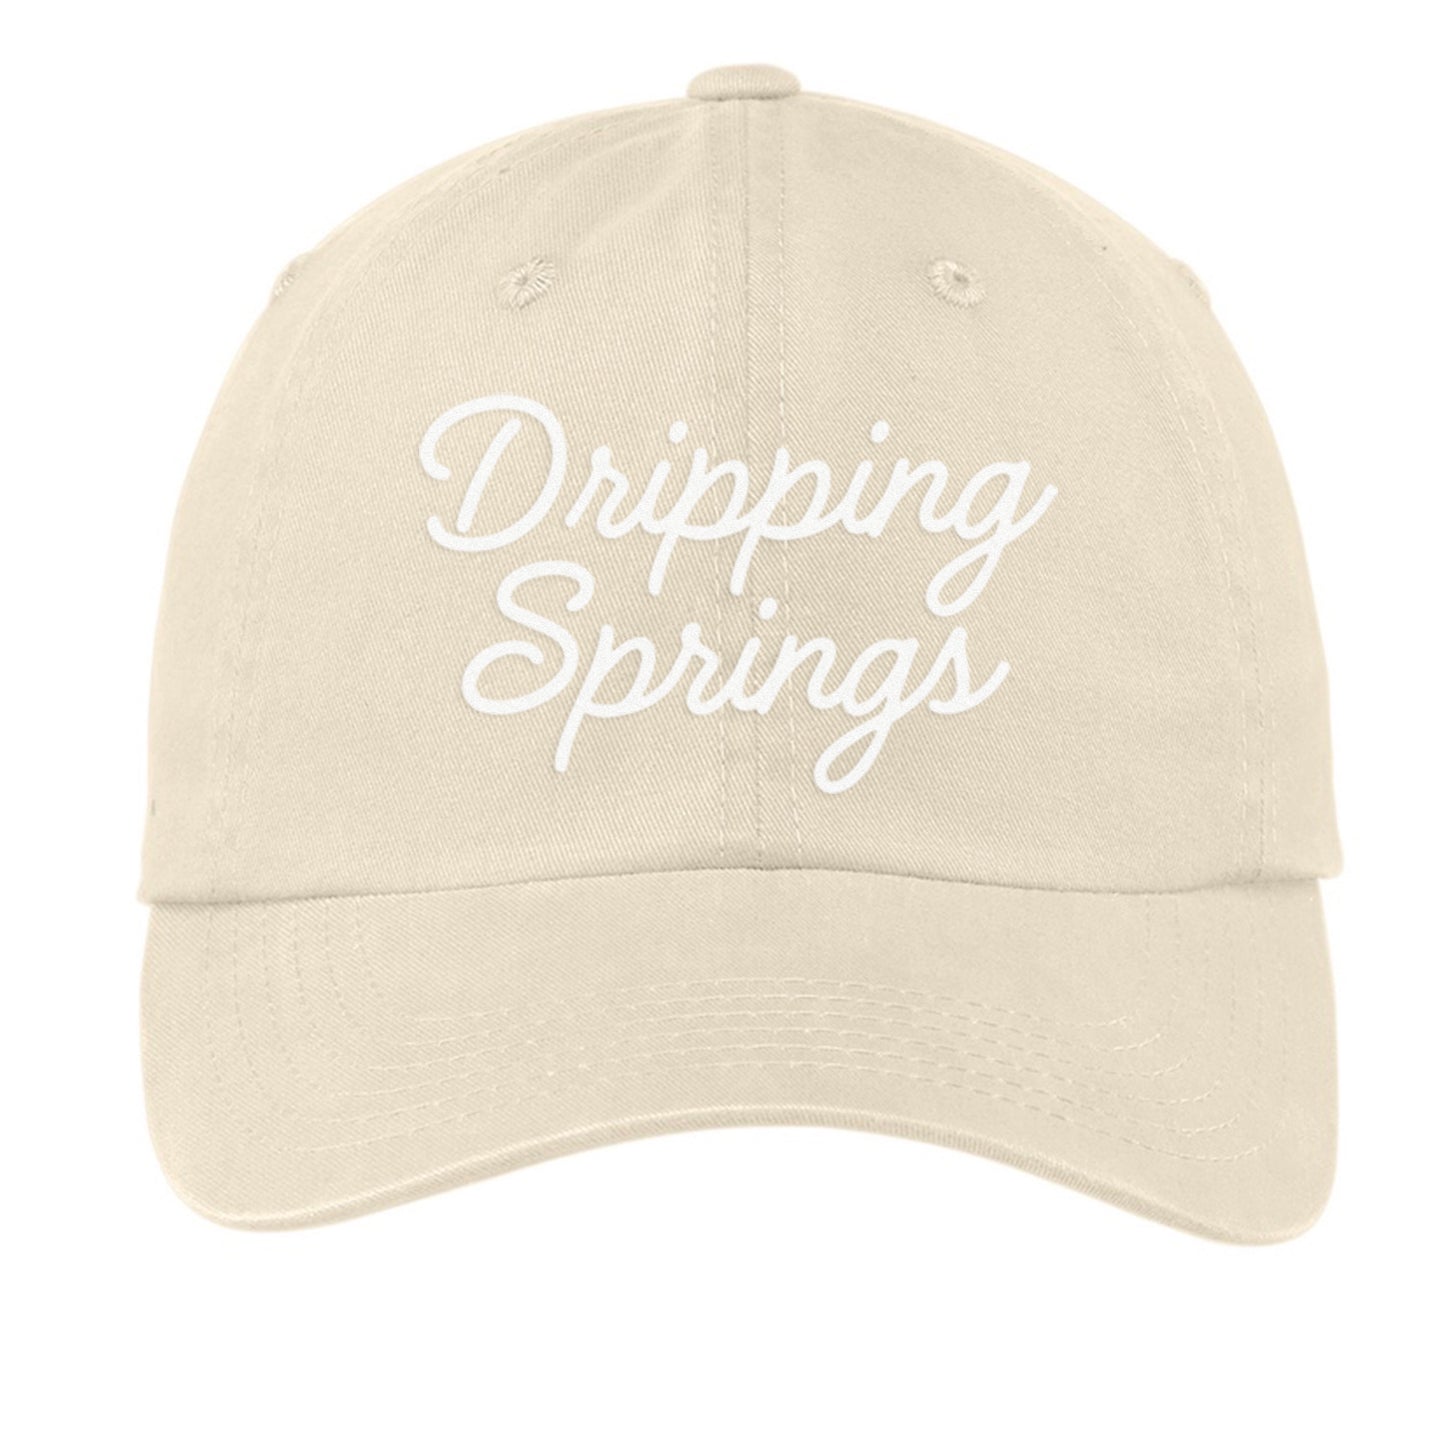 Dripping Springs Cursive Baseball Cap